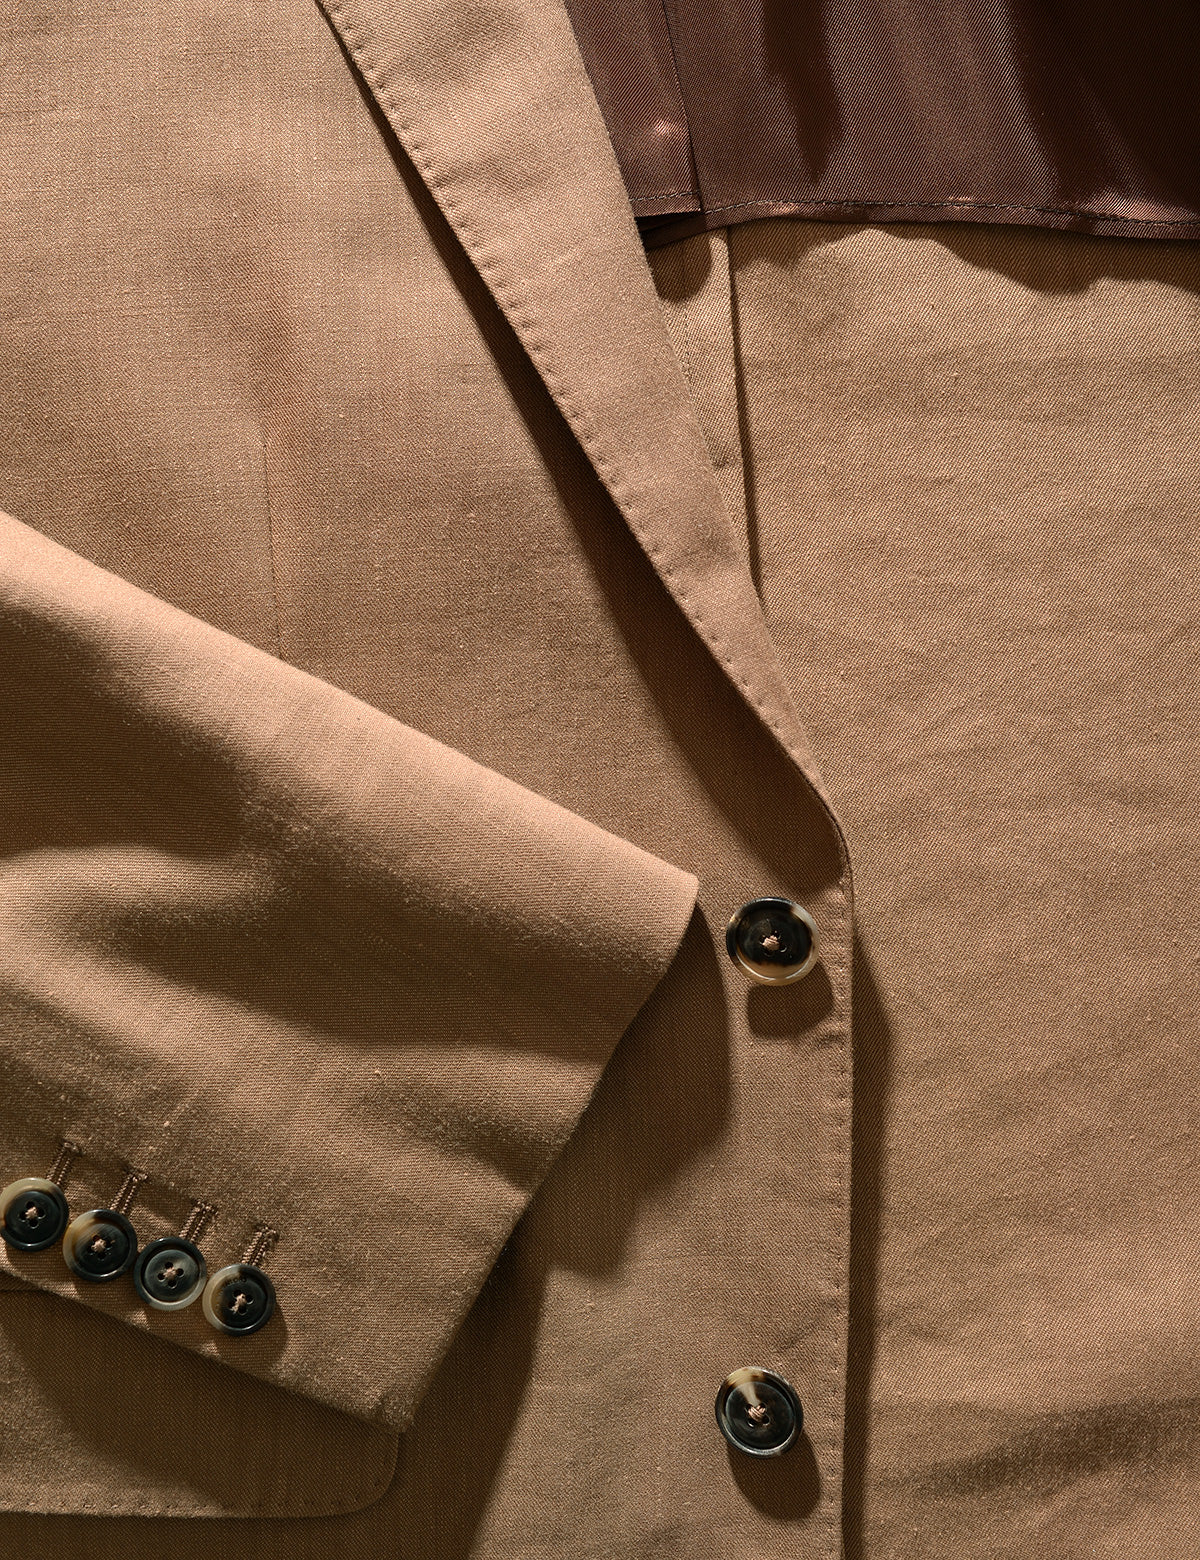 BKT50 Tailored Jacket in Wool Linen - Sahara